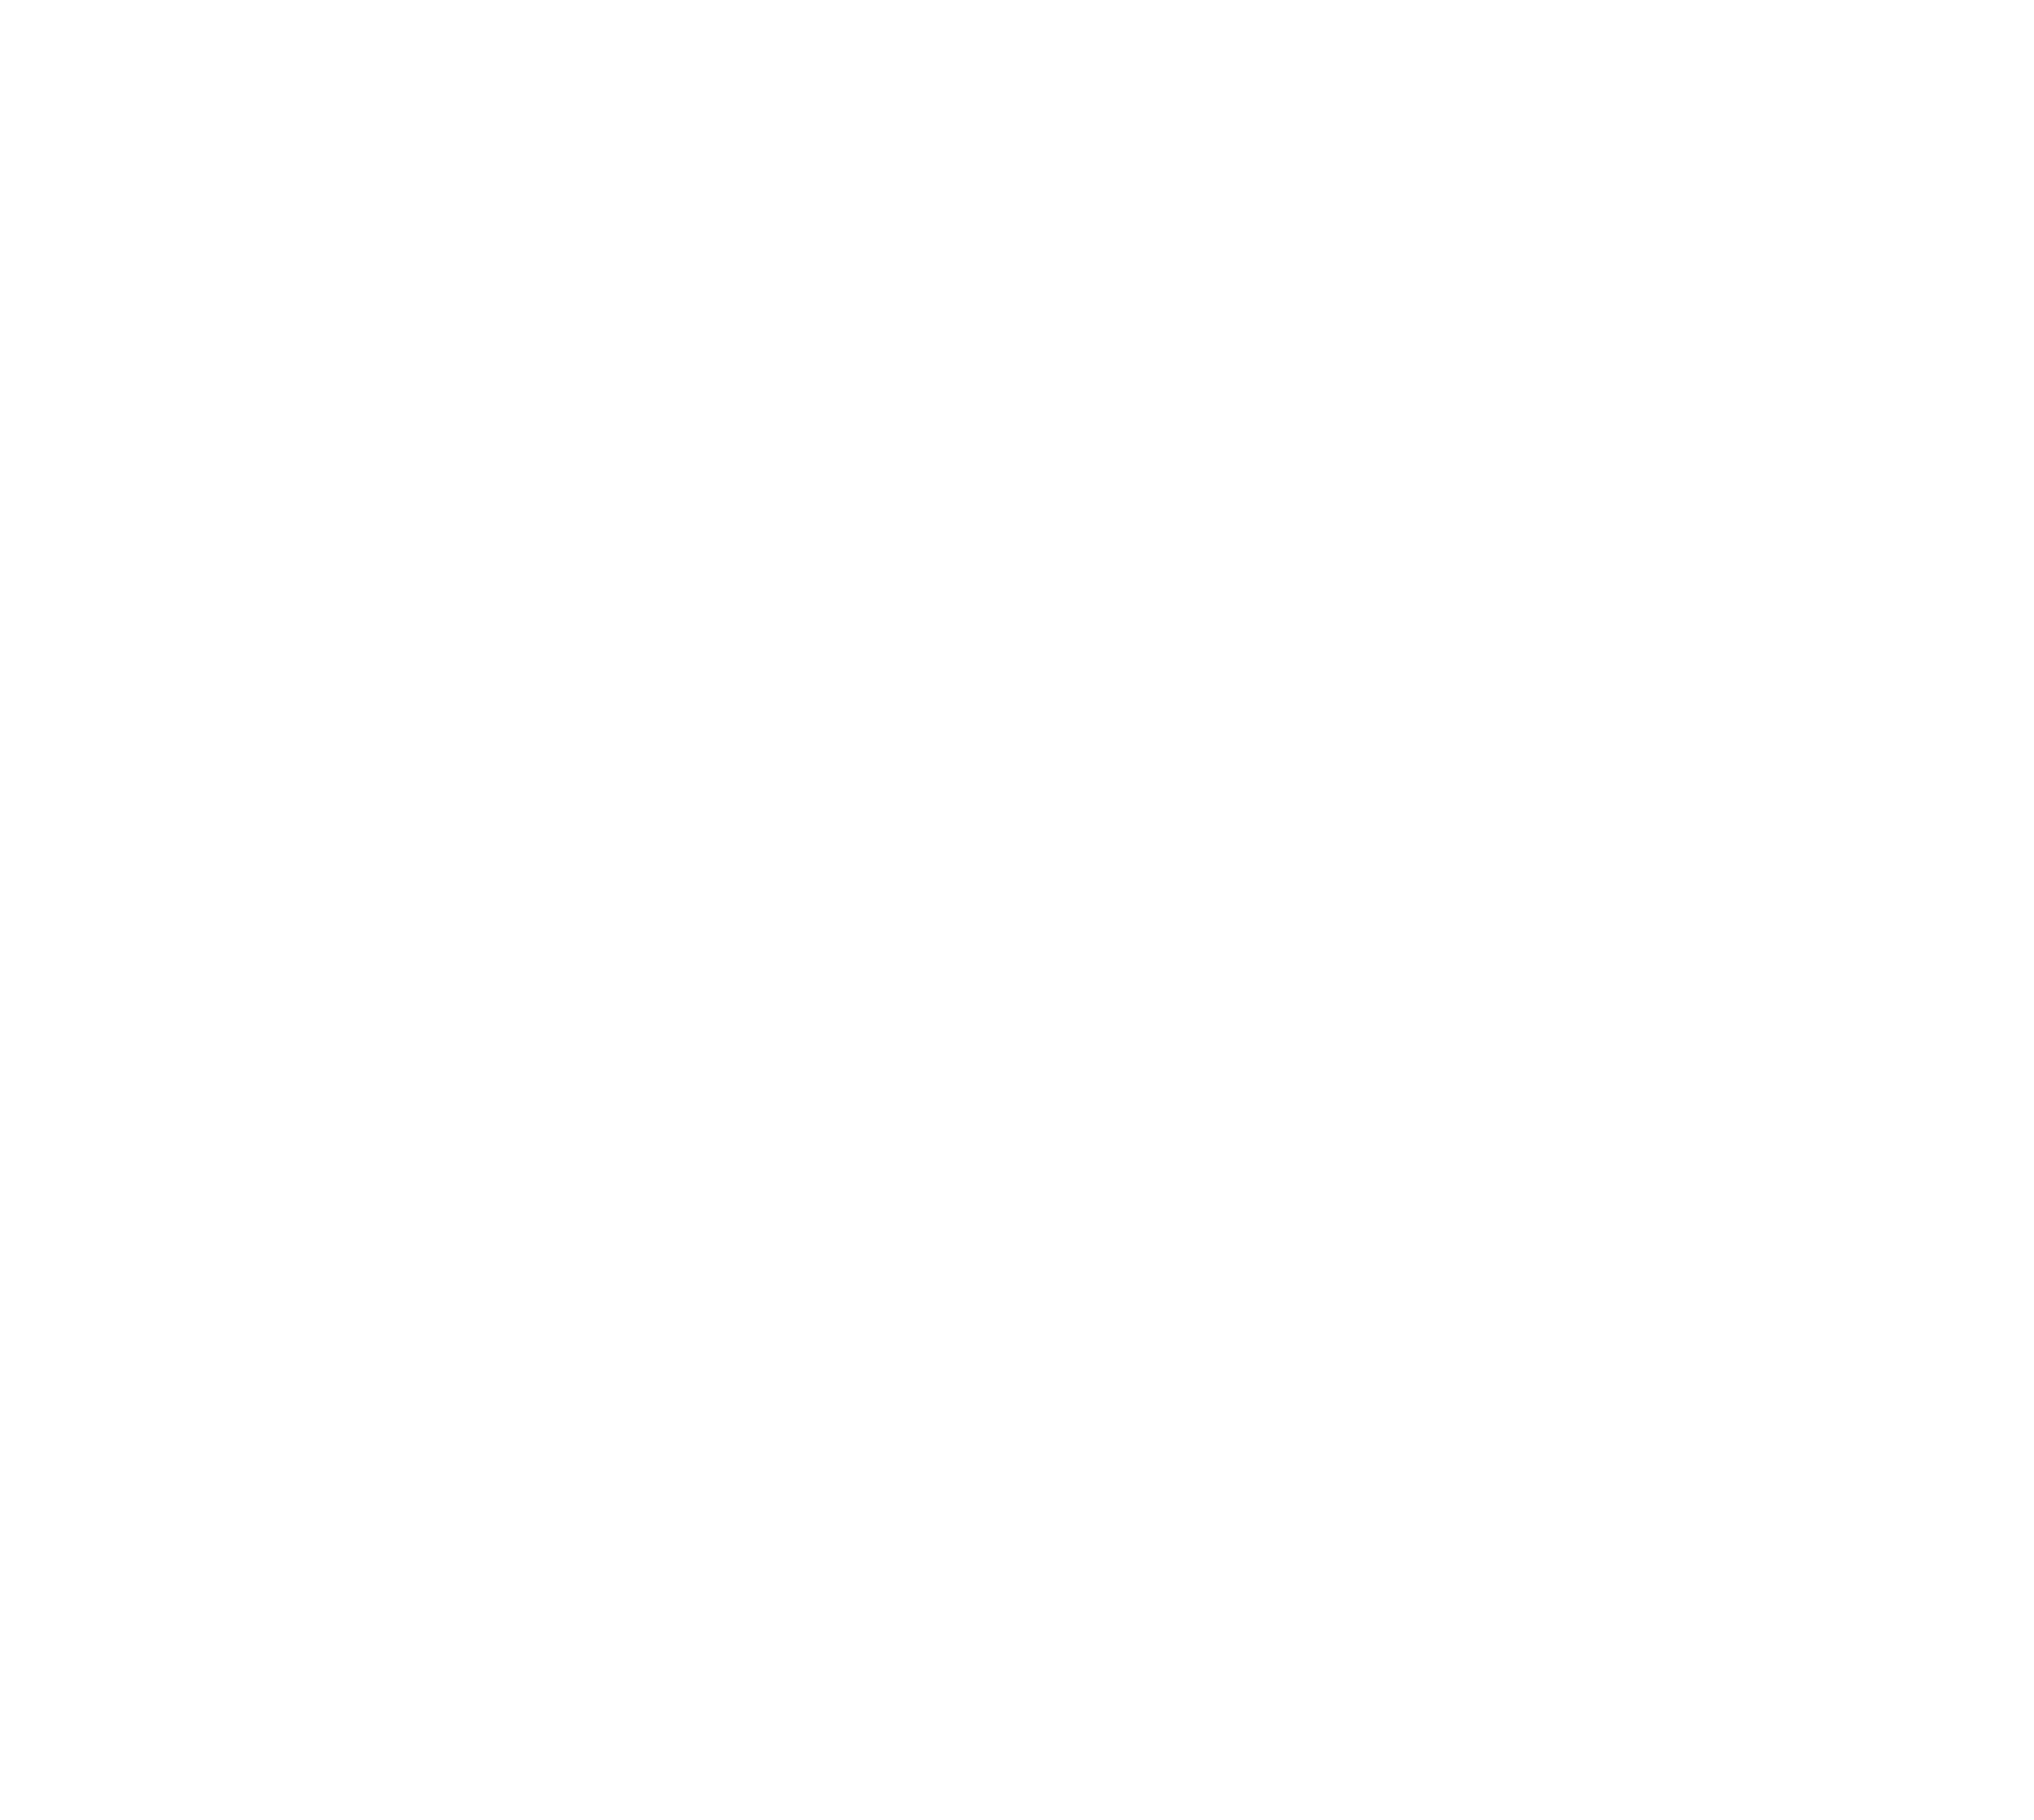 Logo de la universidad de servilla